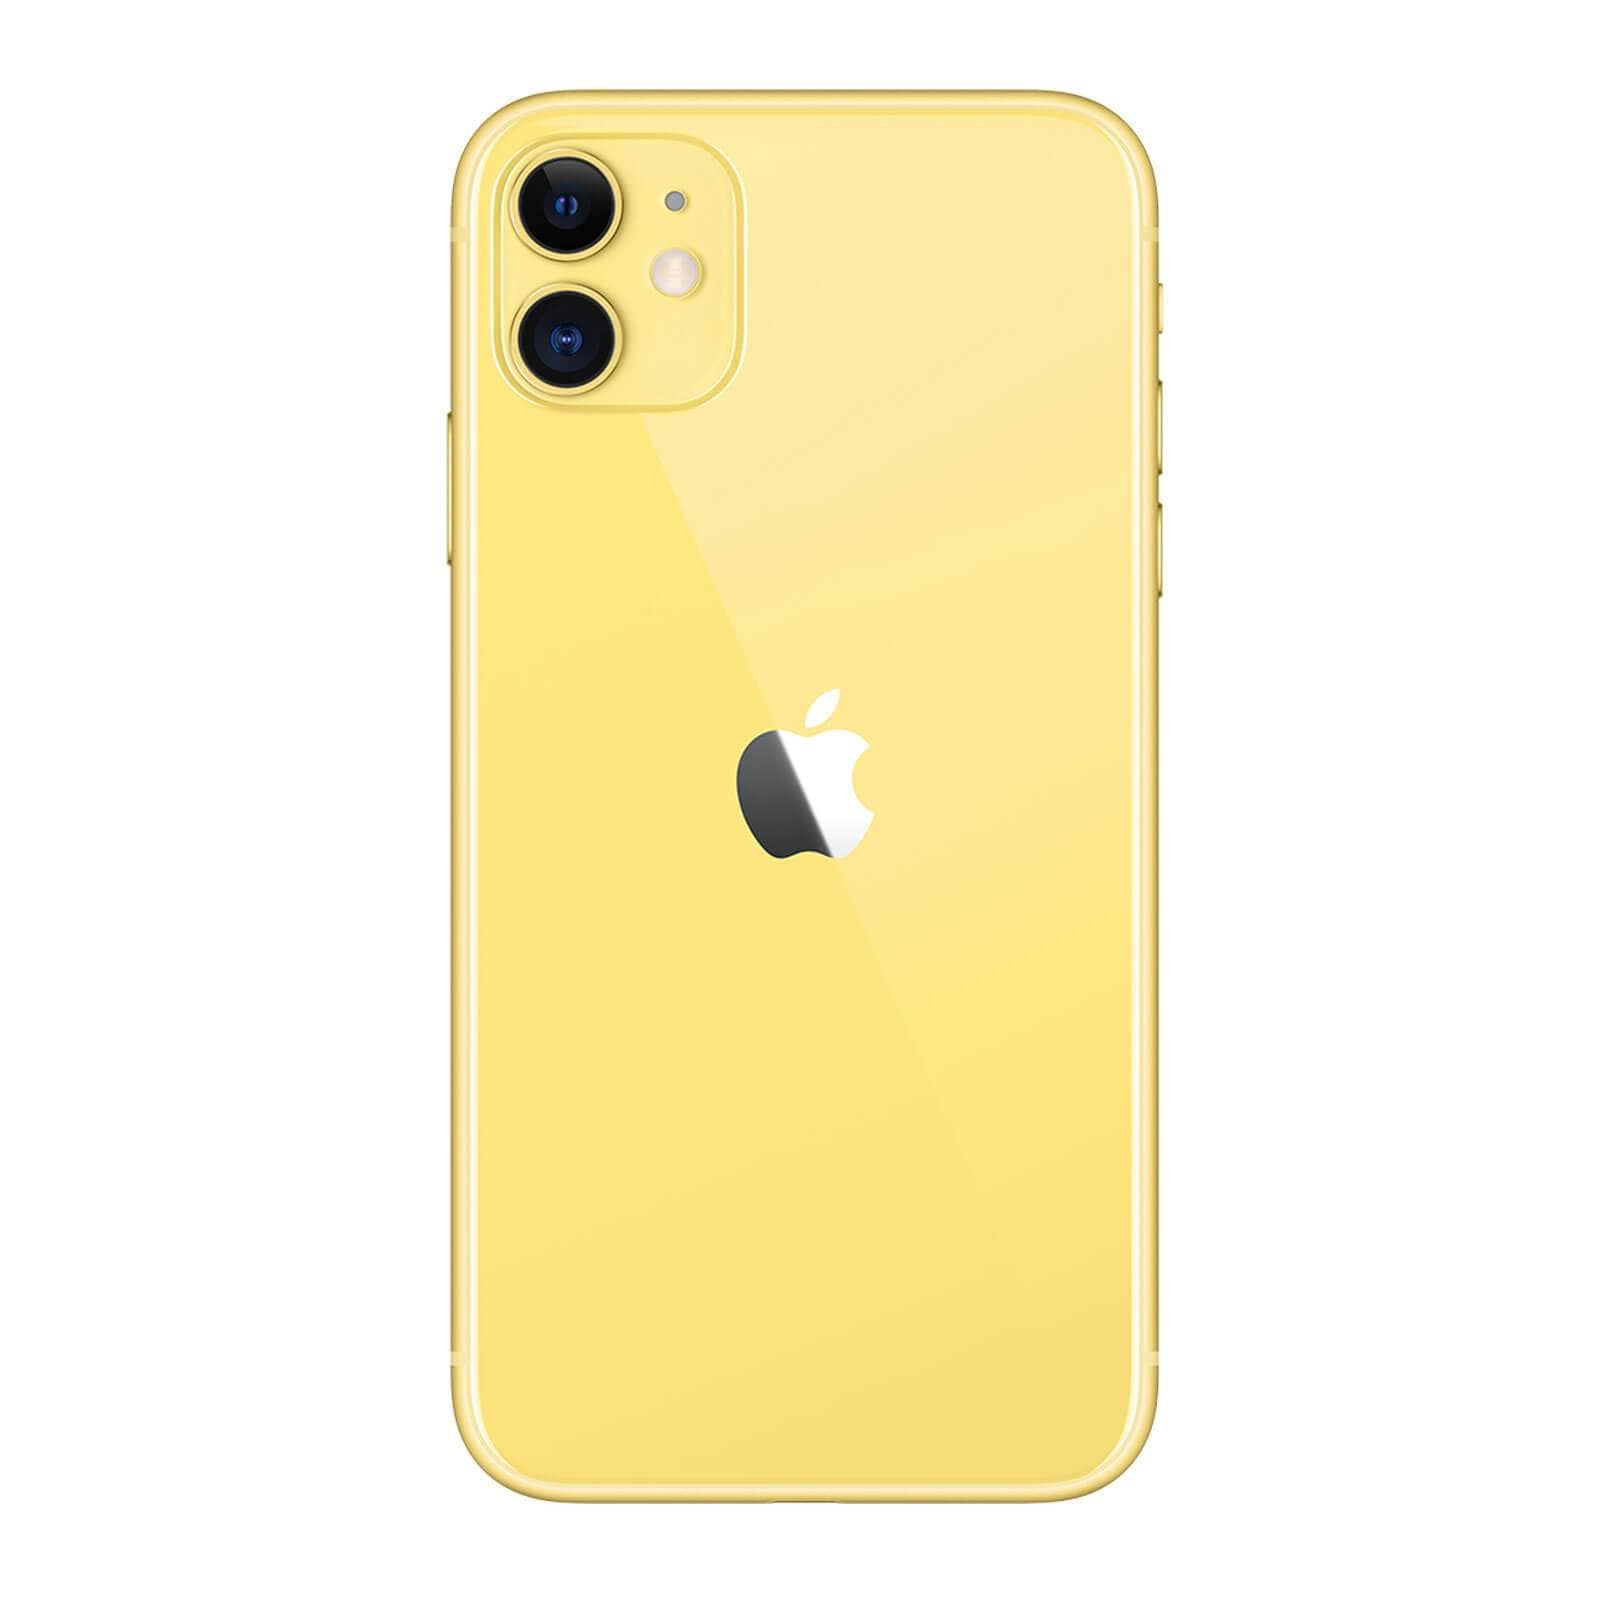 Apple iPhone 11 128GB Yellow Fair - Unlocked